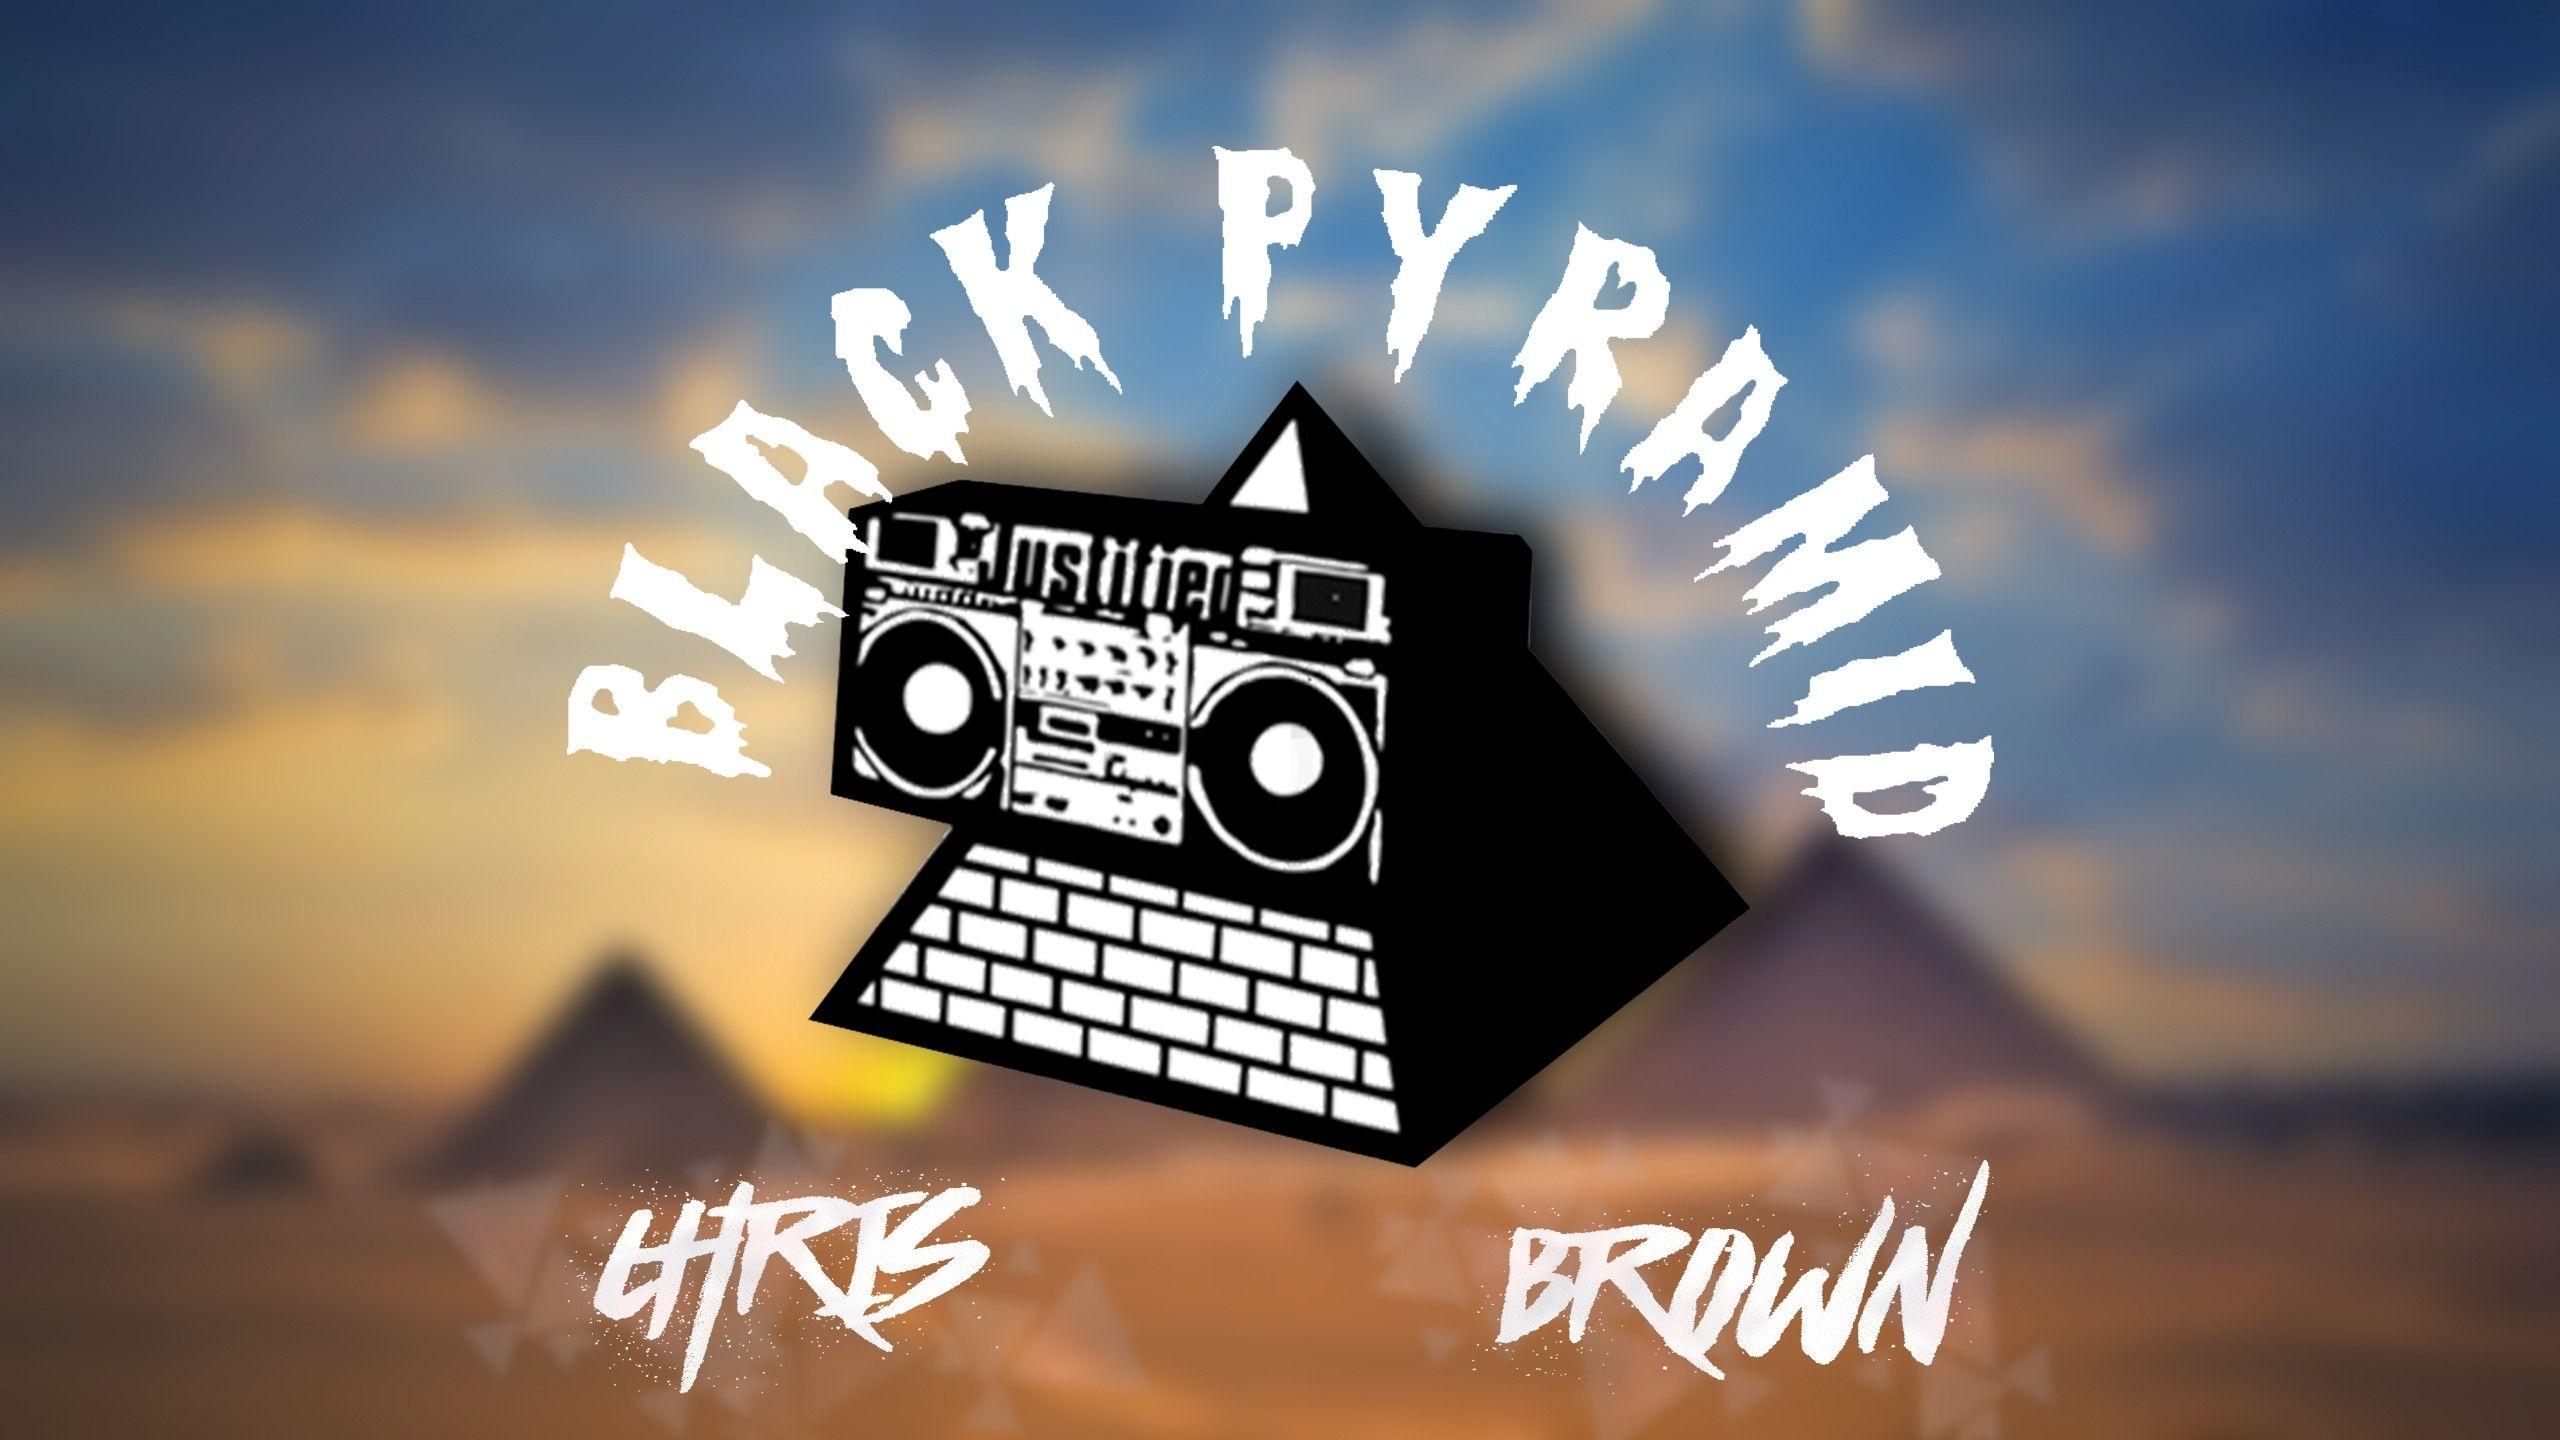 Black Pyramid Chris Brown Logo - Wallpaper : illustration, text, logo, graphic design, poster, brand